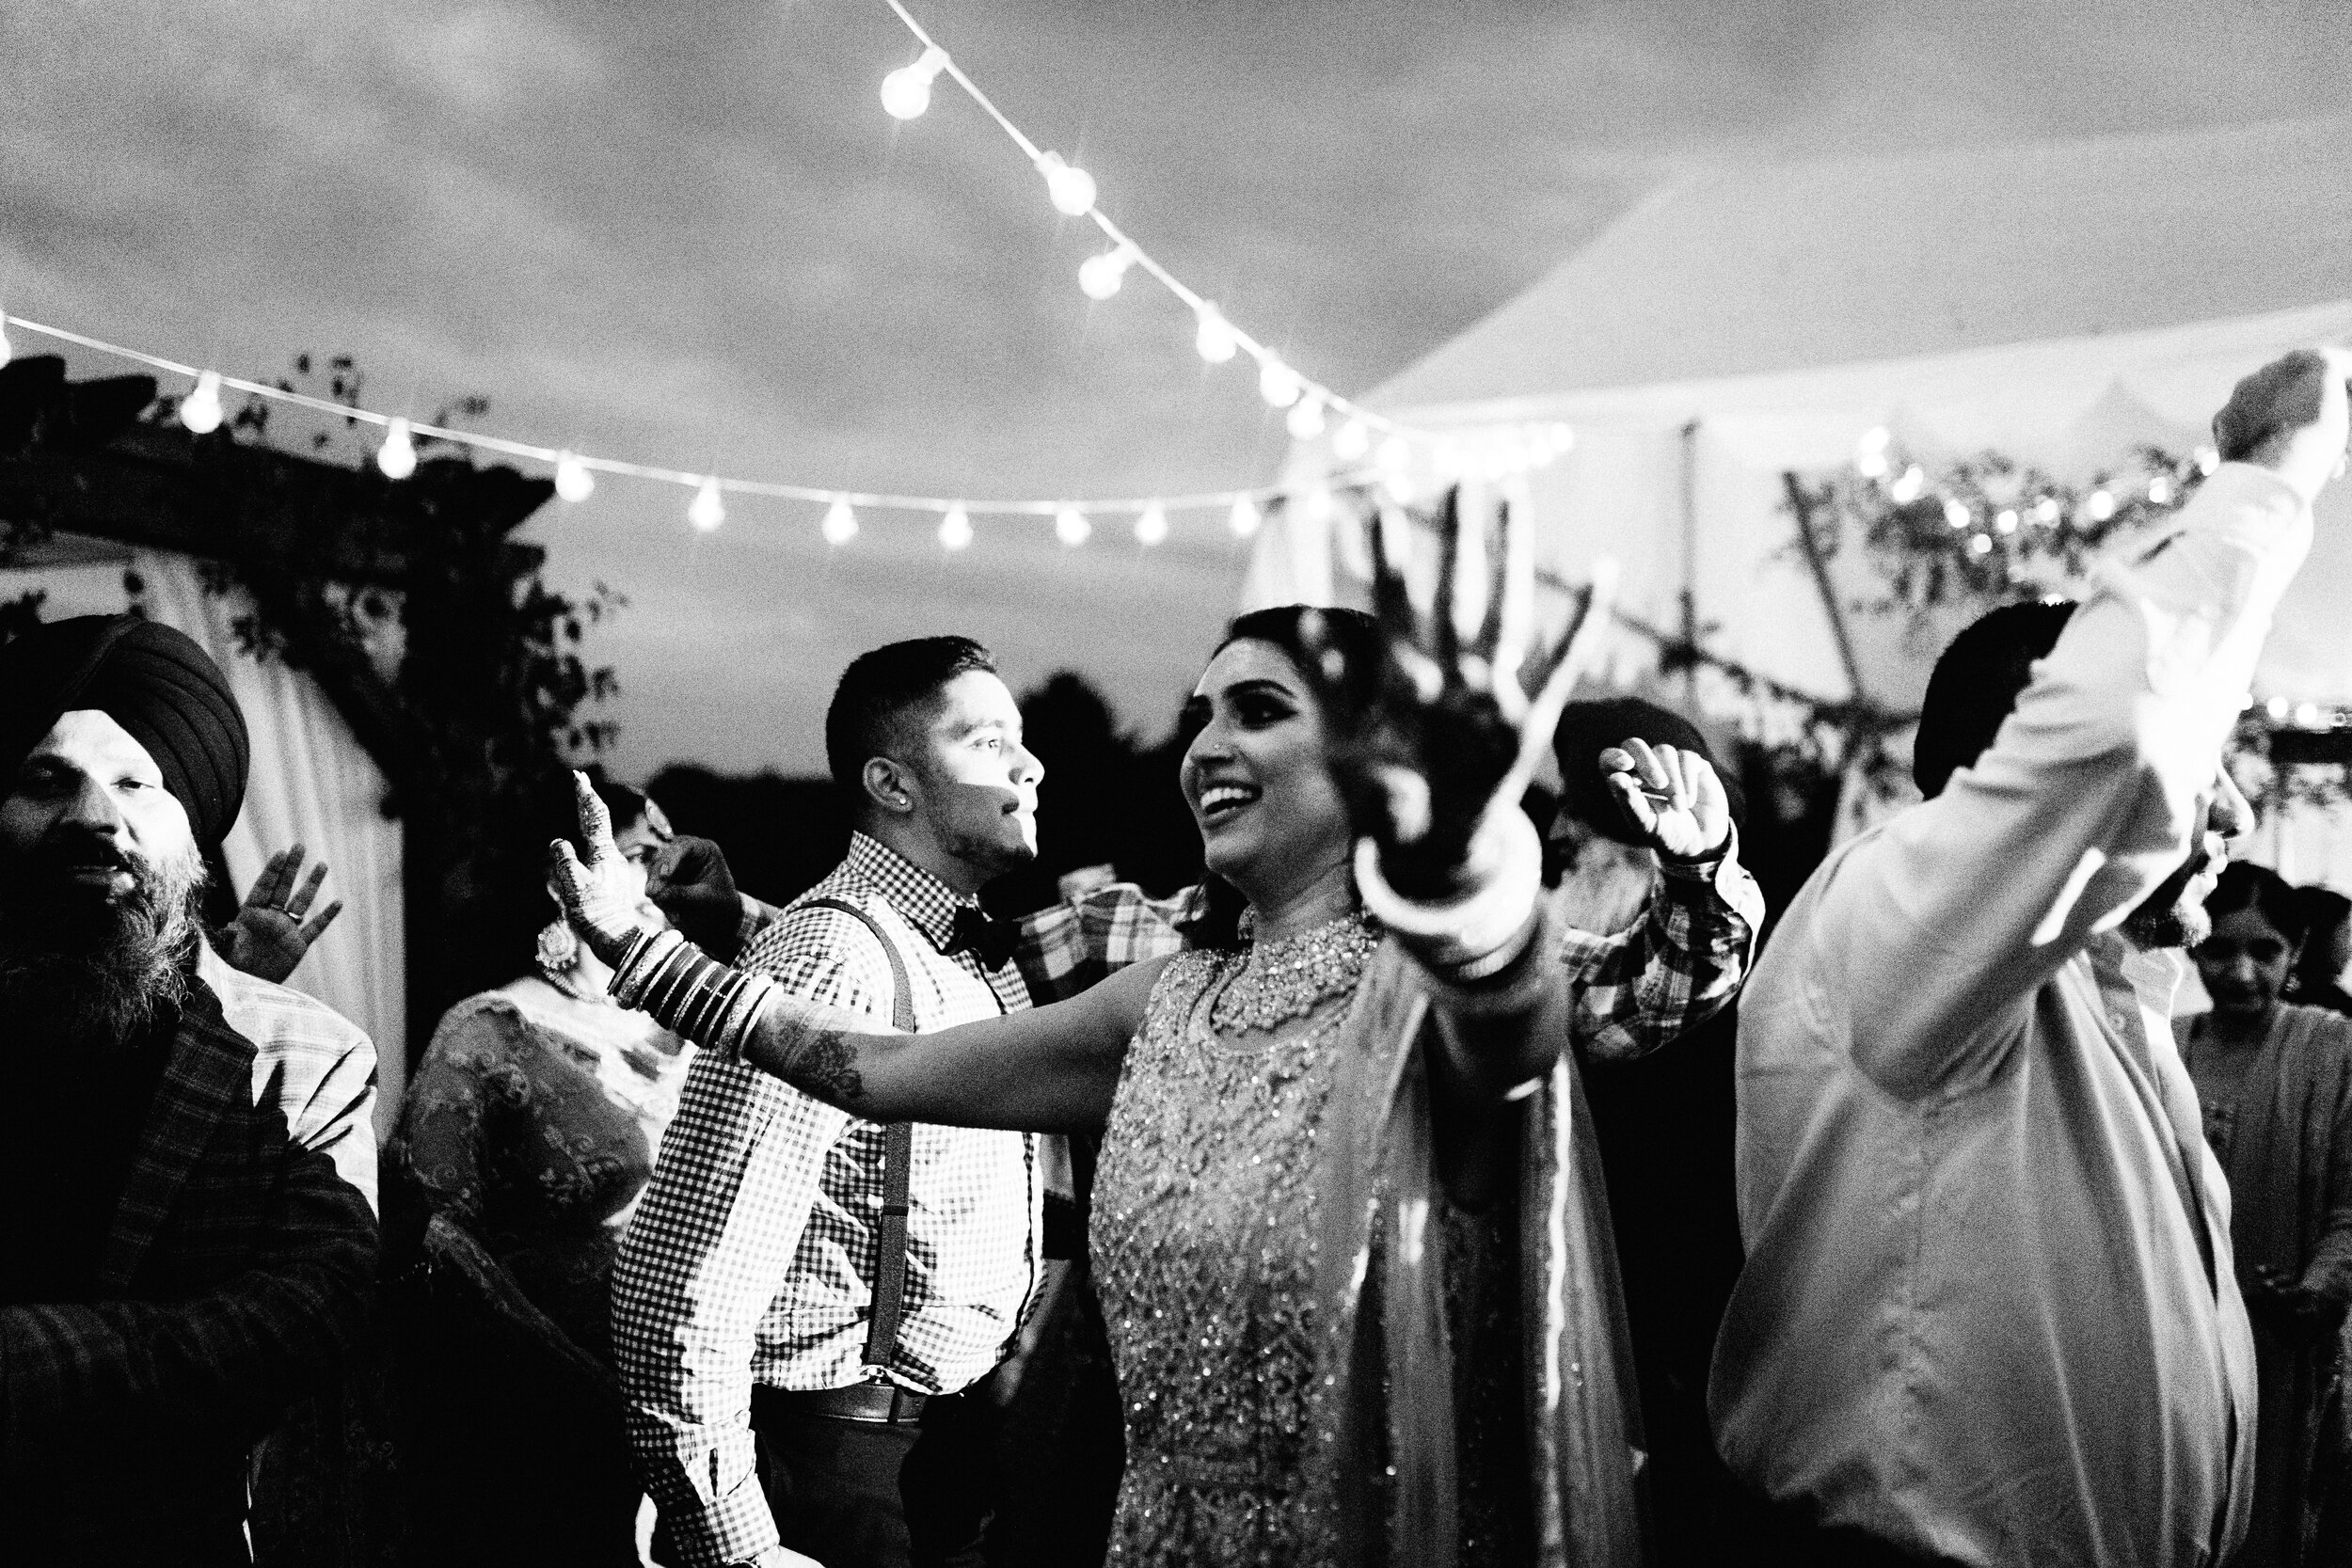 ShadowShinePictures-Sukhi-Balraj-Bains-Kaur-Grand-Rapids-Indian-Wedding-Photography-69.jpg